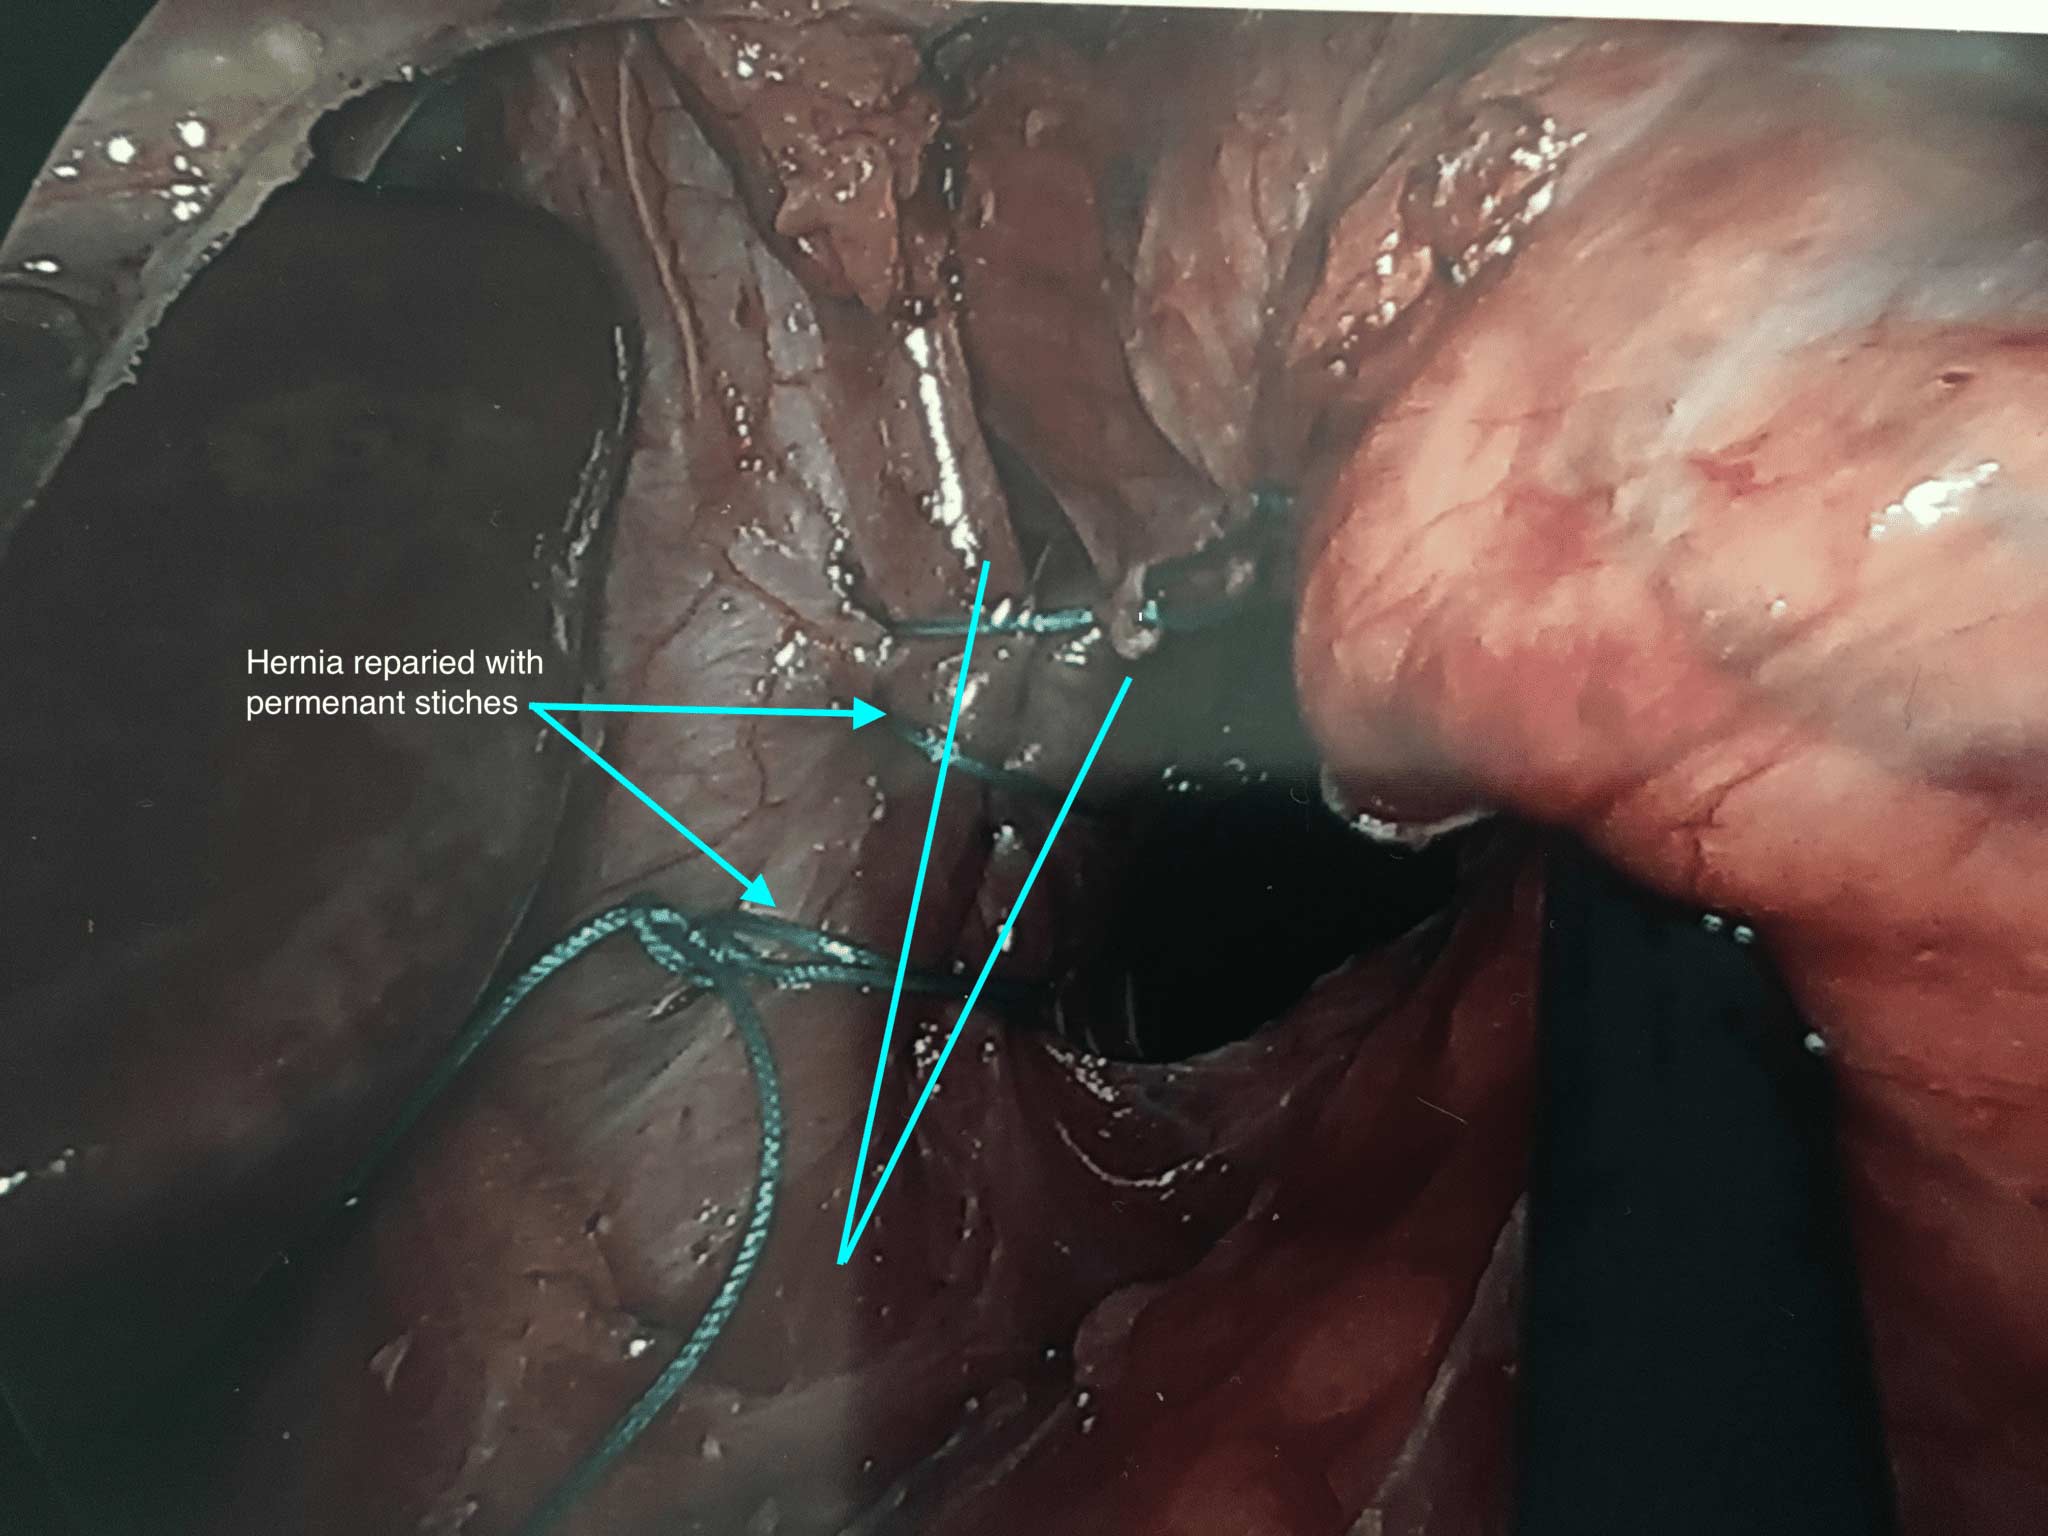 Surgical repair of Hiatal hernia causing reflux